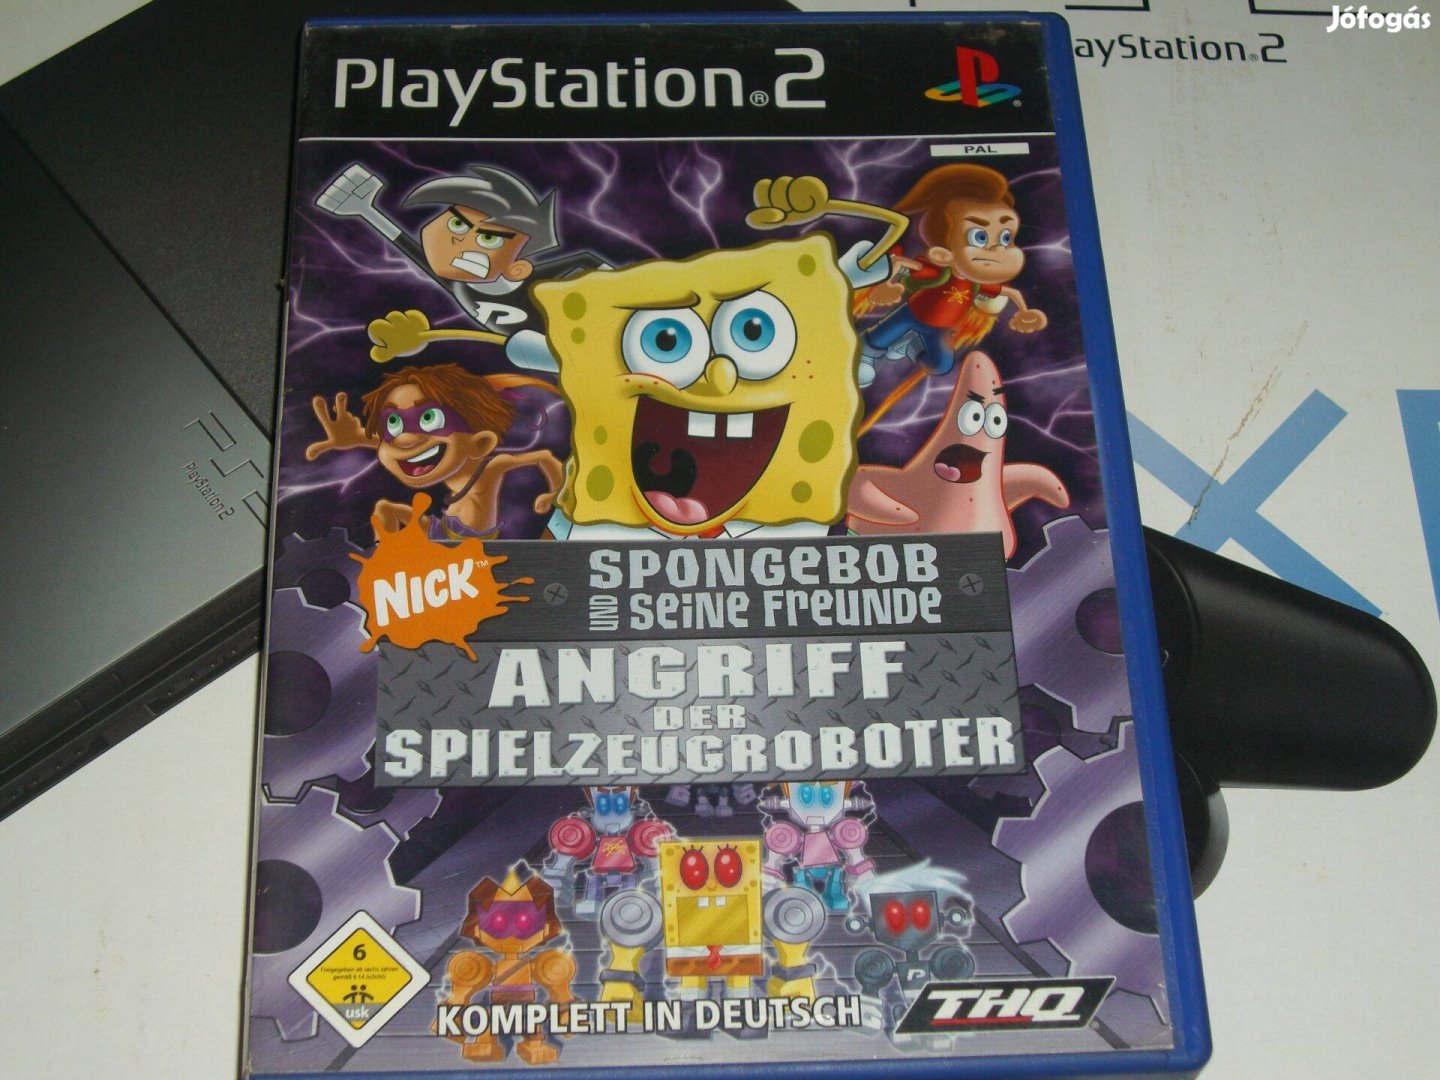 Spongebob Seine Freunde Ps 2 eredeti lemez eladó